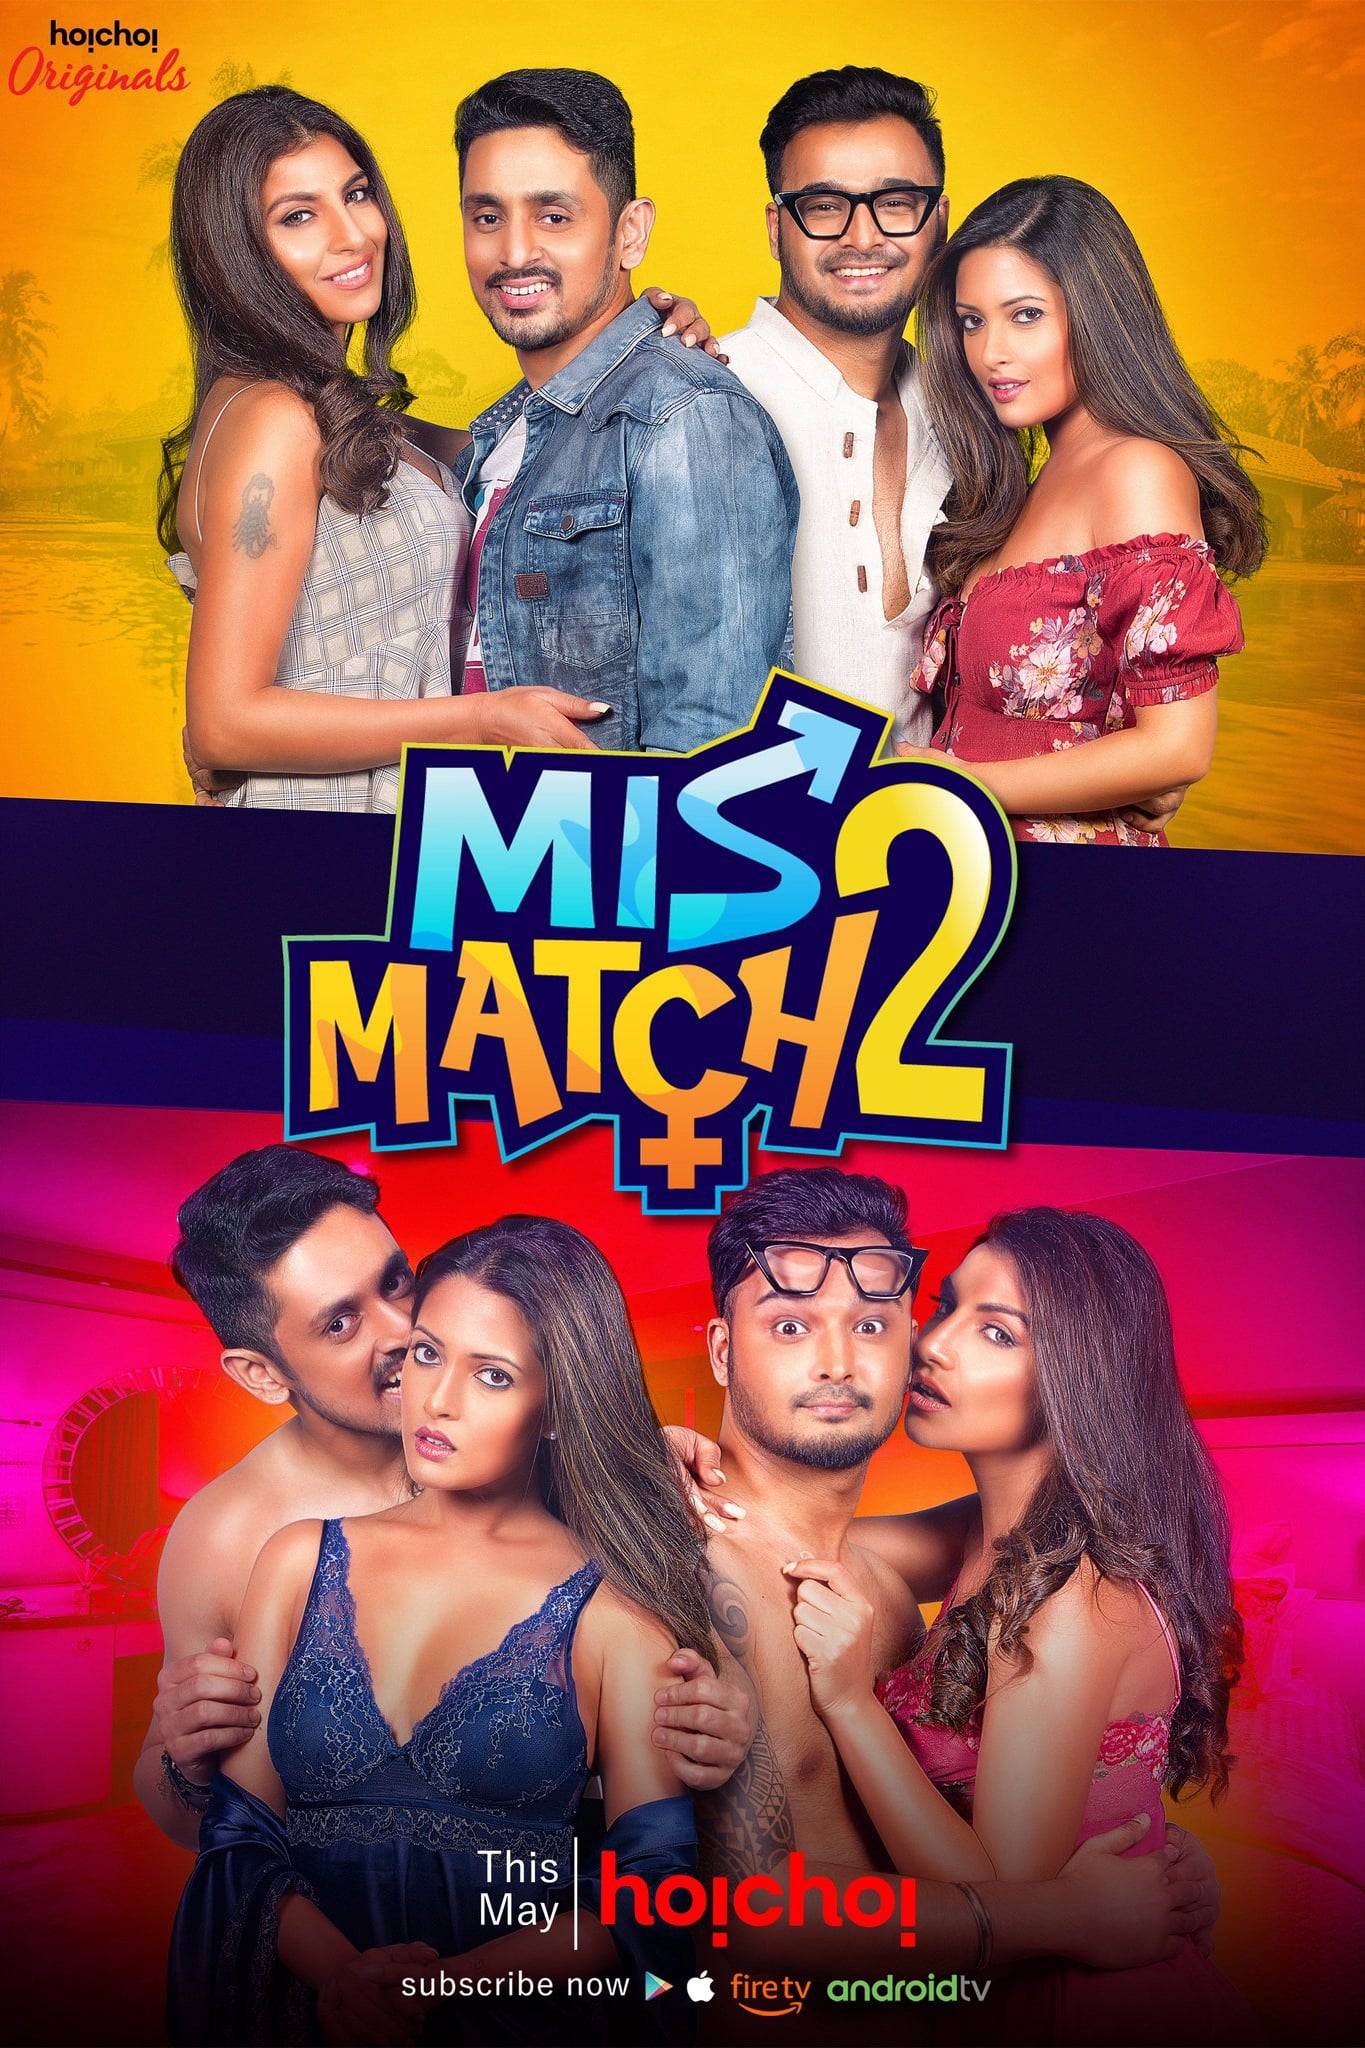 Download Mismatch 2019 S02 Hindi Dubbed Hoichoi Original Complete Web Series 480p HDRip 330MB